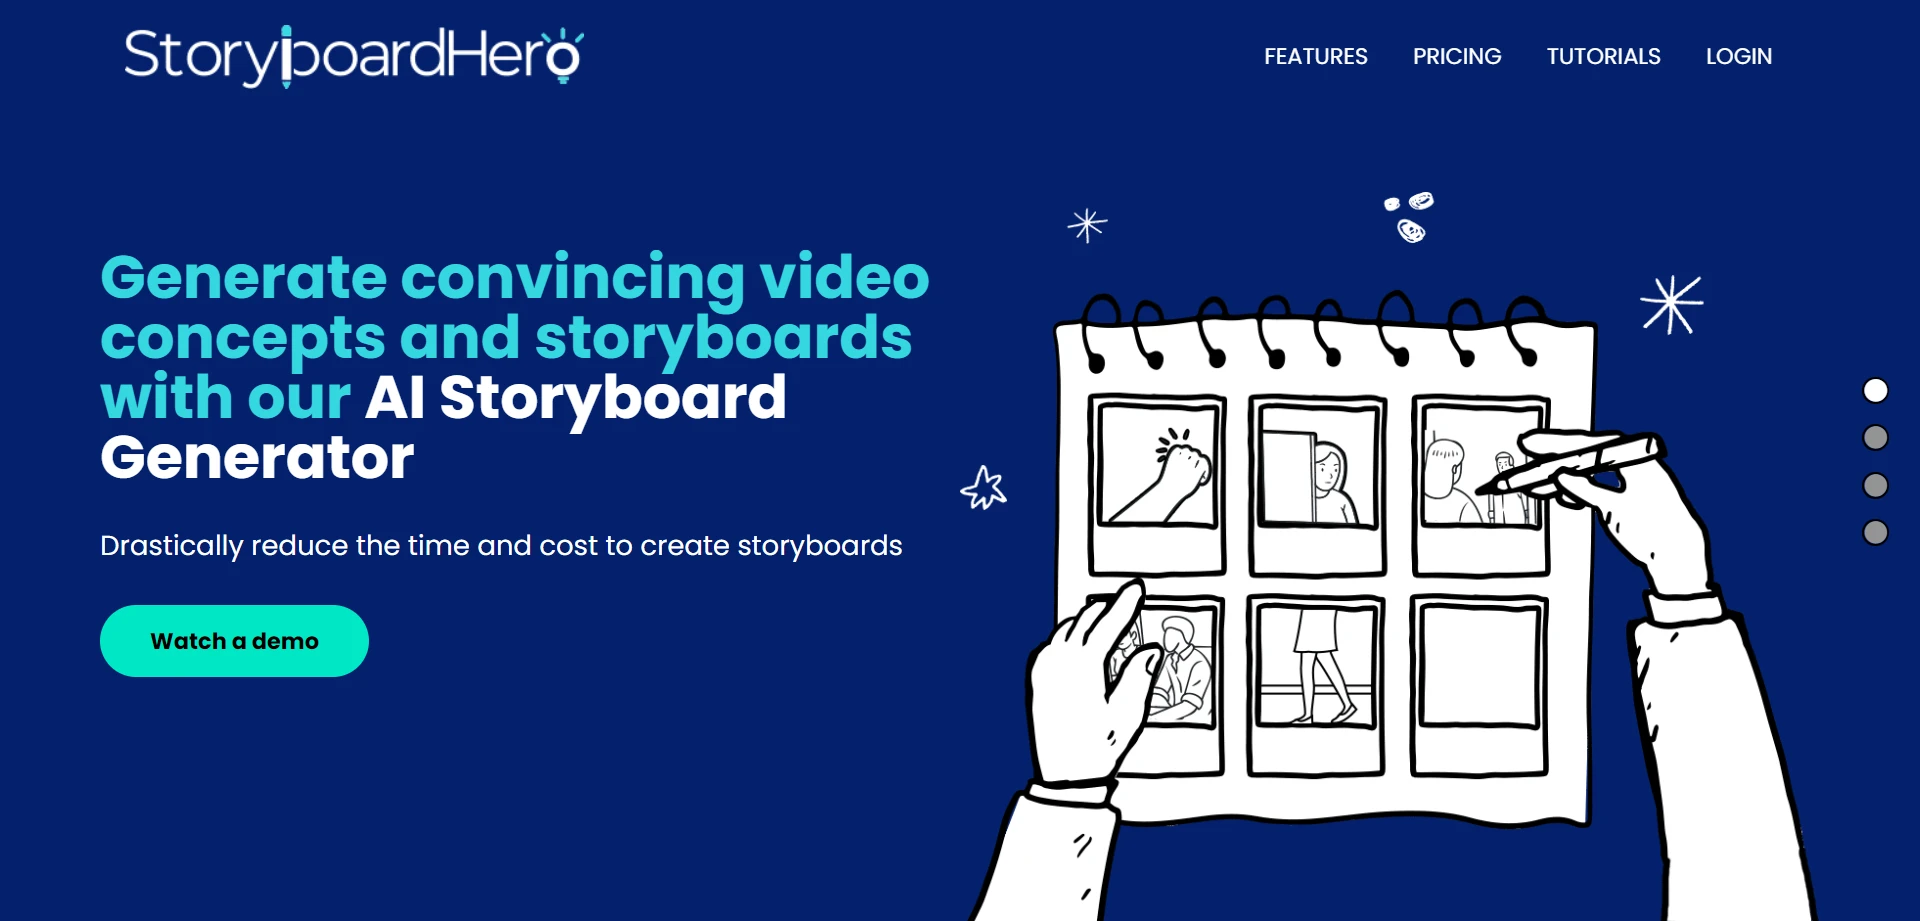 Storyboard Herowebsite picture